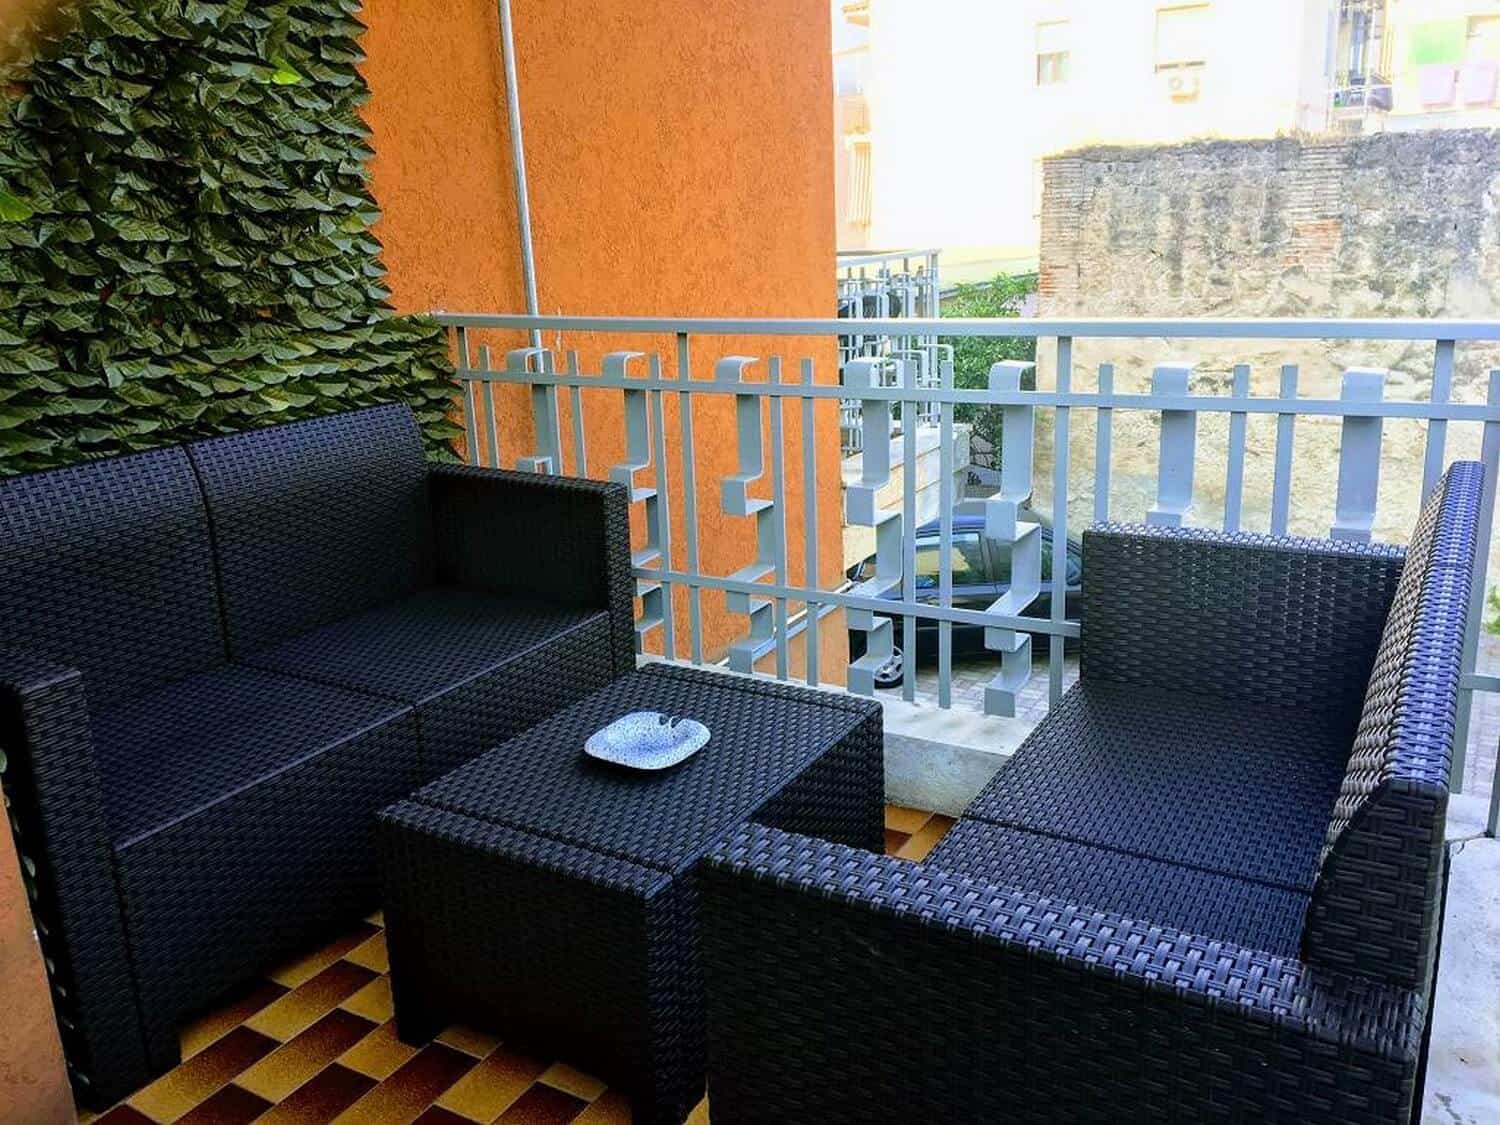 Centro Uffici Aversa: outdoor business lounge